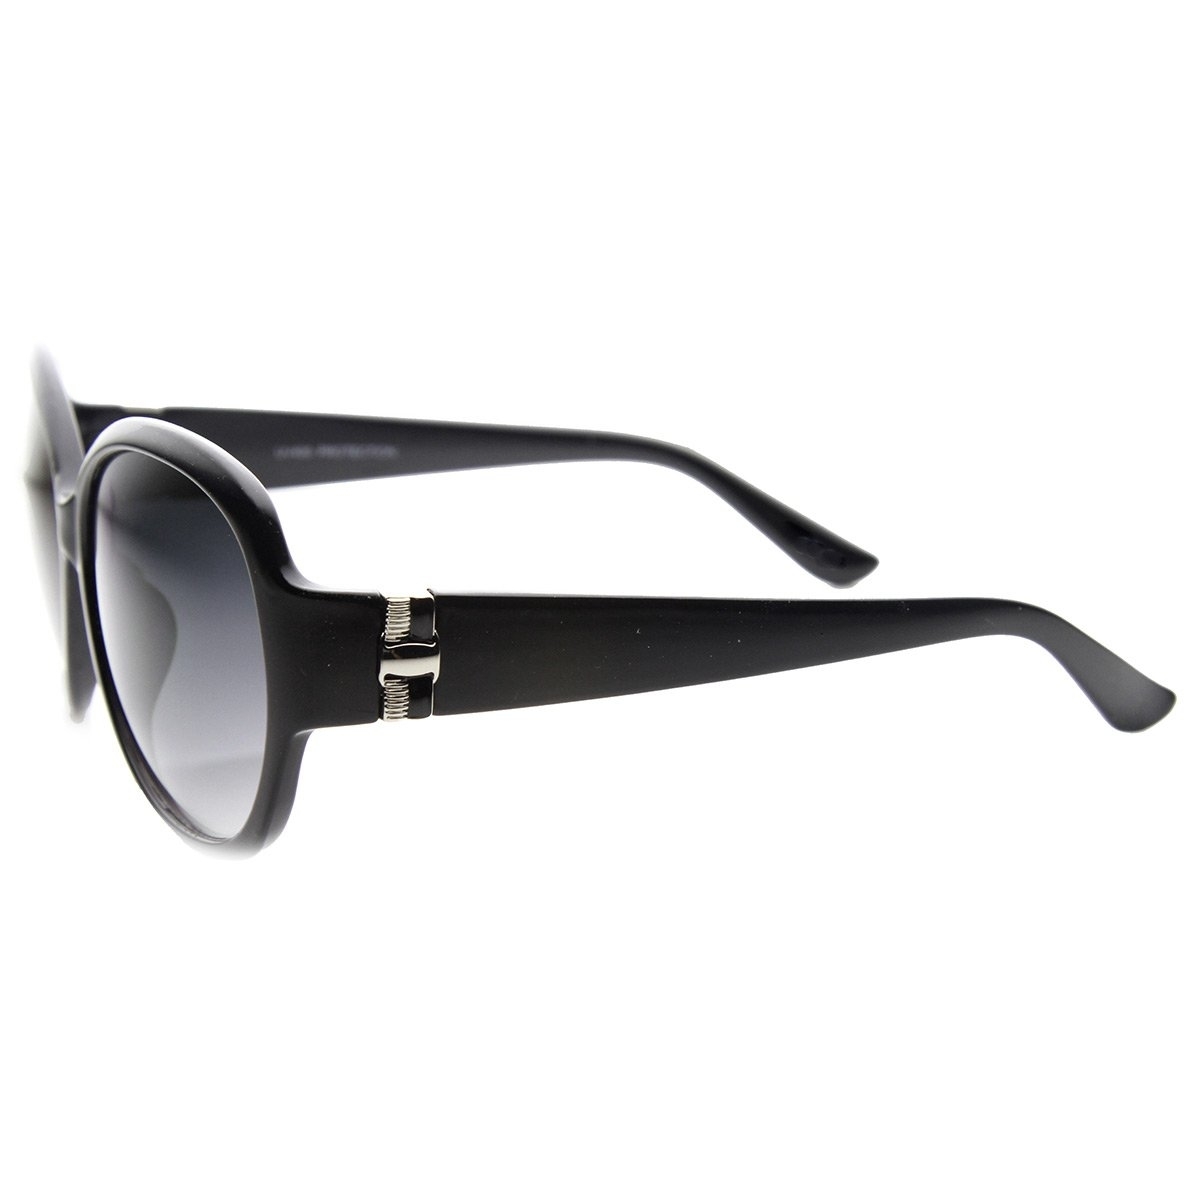 Designer Large Metal Accent Round Oversized Sunglasses - Black-Black Lavender